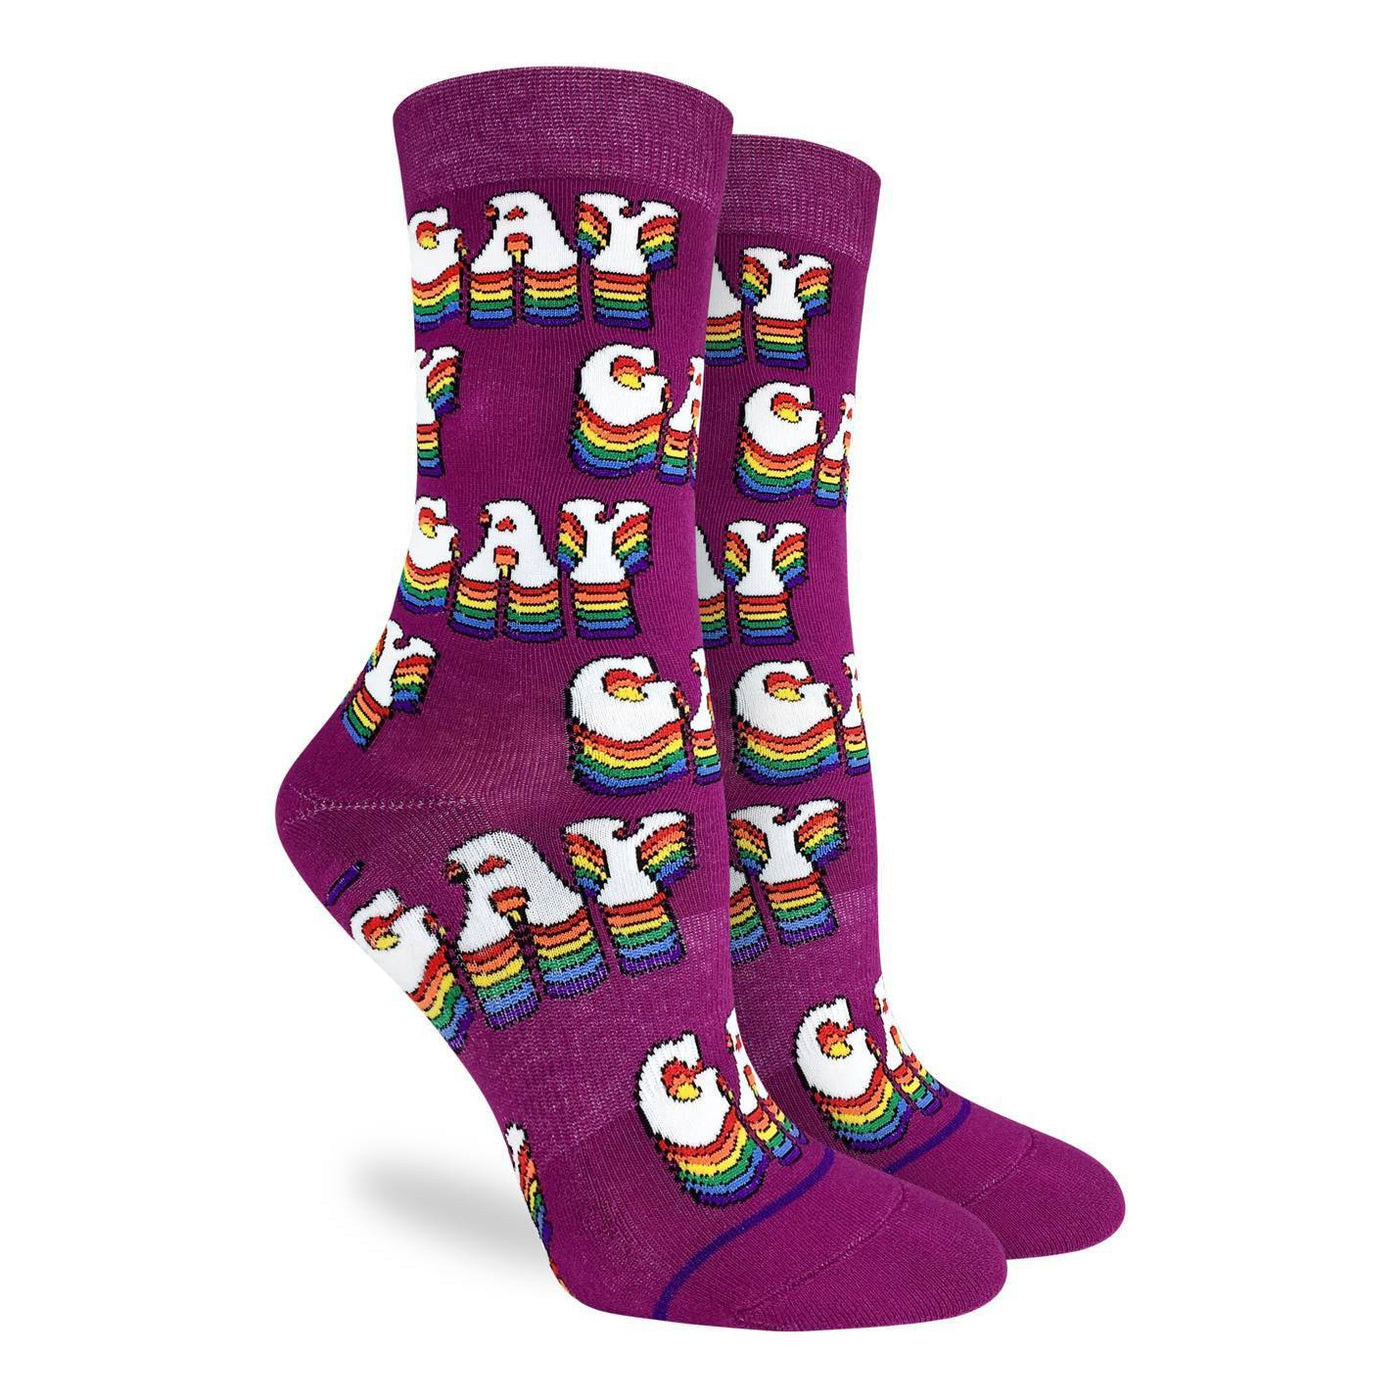 "Gay Pride" Cotton Crew Socks by Good Luck Sock